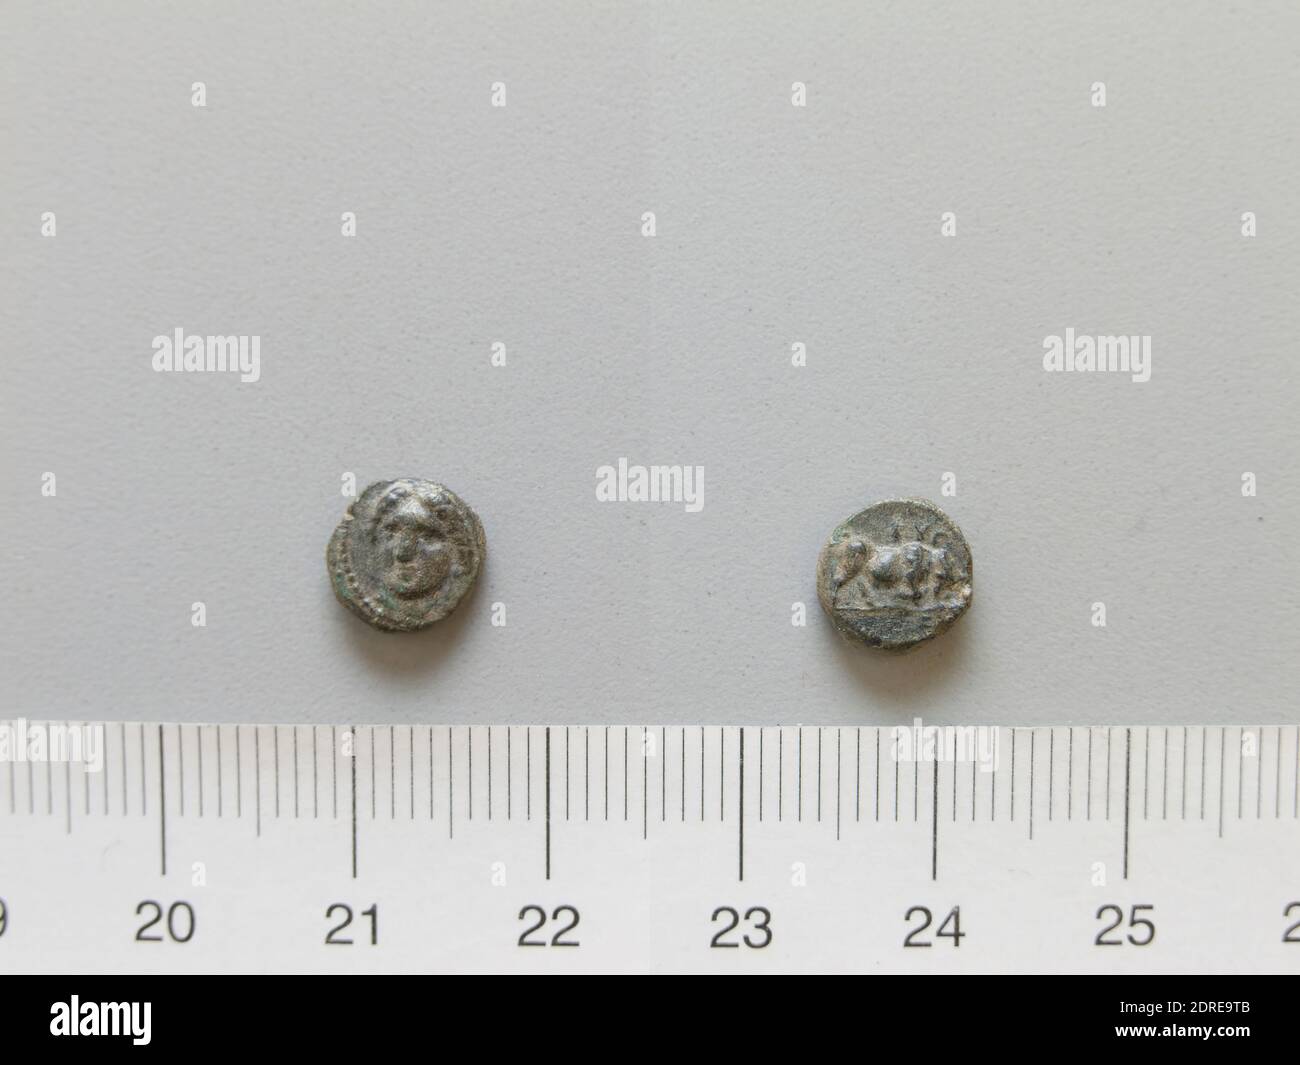 Menta: Phygela, moneta da Phygela, 380–350 a.C., rame, 0.74 g, 10:00, 9 mm, Made in Phygeia, Ionia, Greco, IV secolo a.C., Numismatica Foto Stock